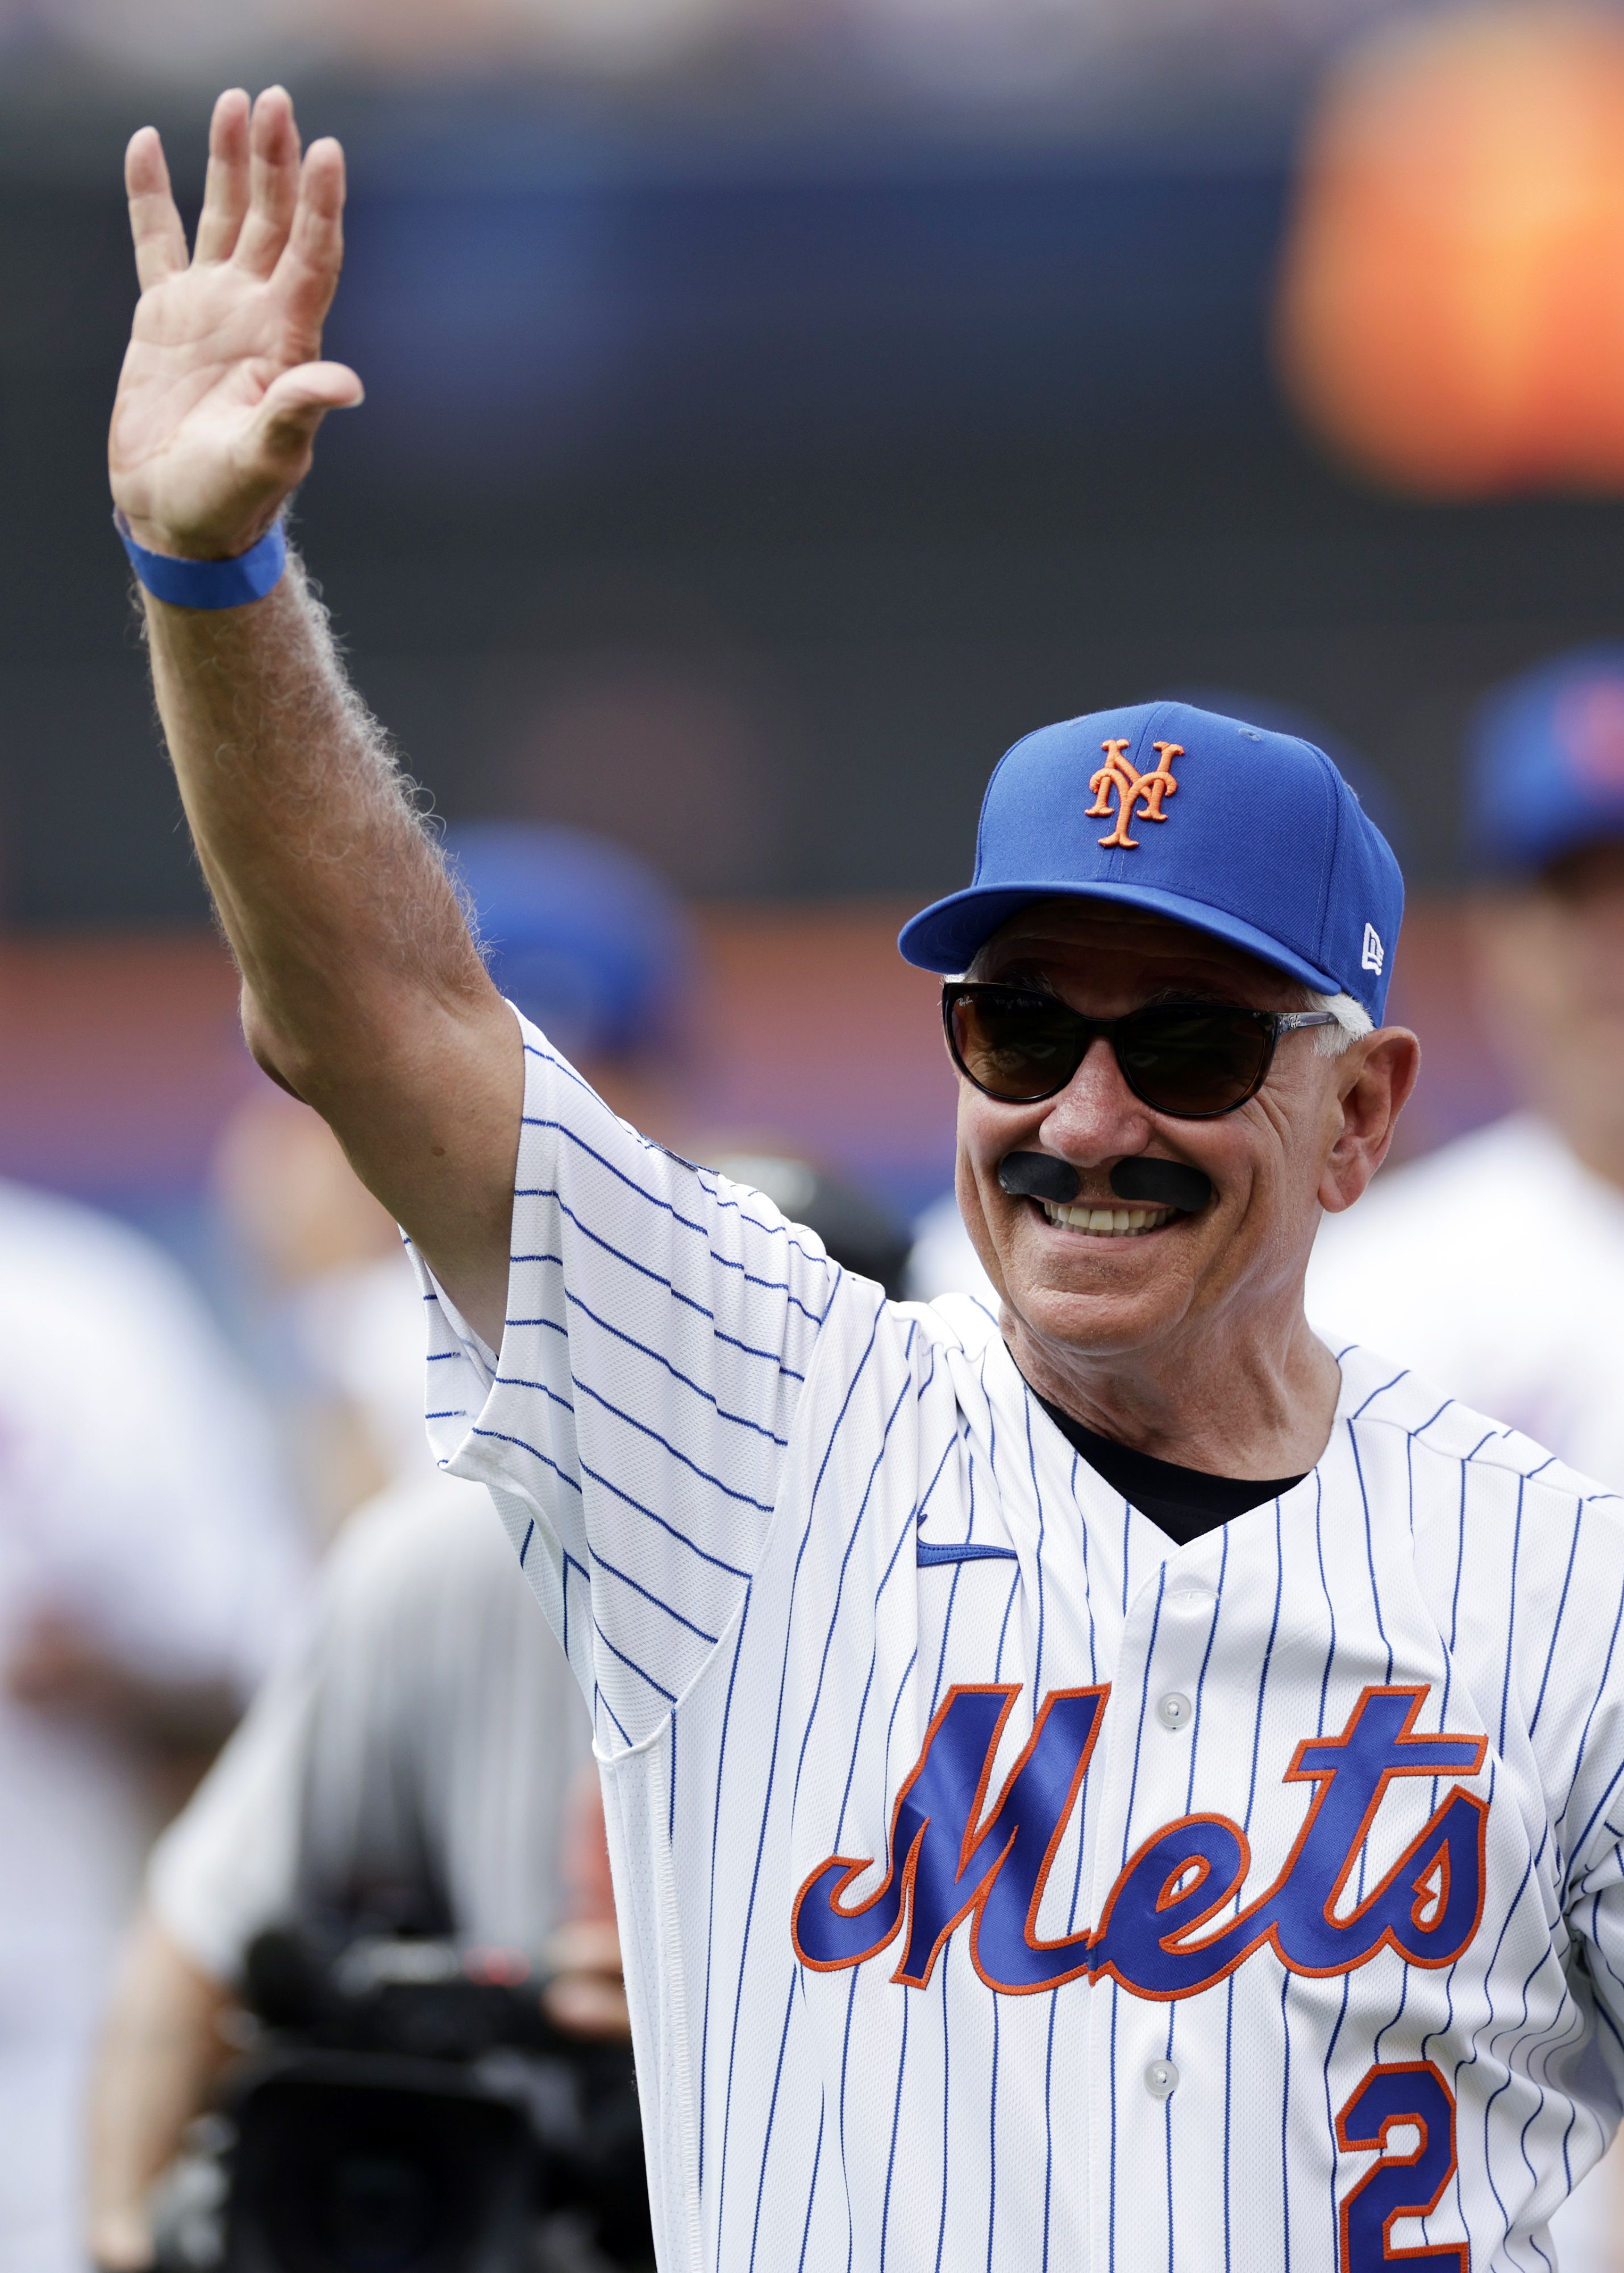 New York Mets news: Jerry Koosman's No. 36 will be retired next year